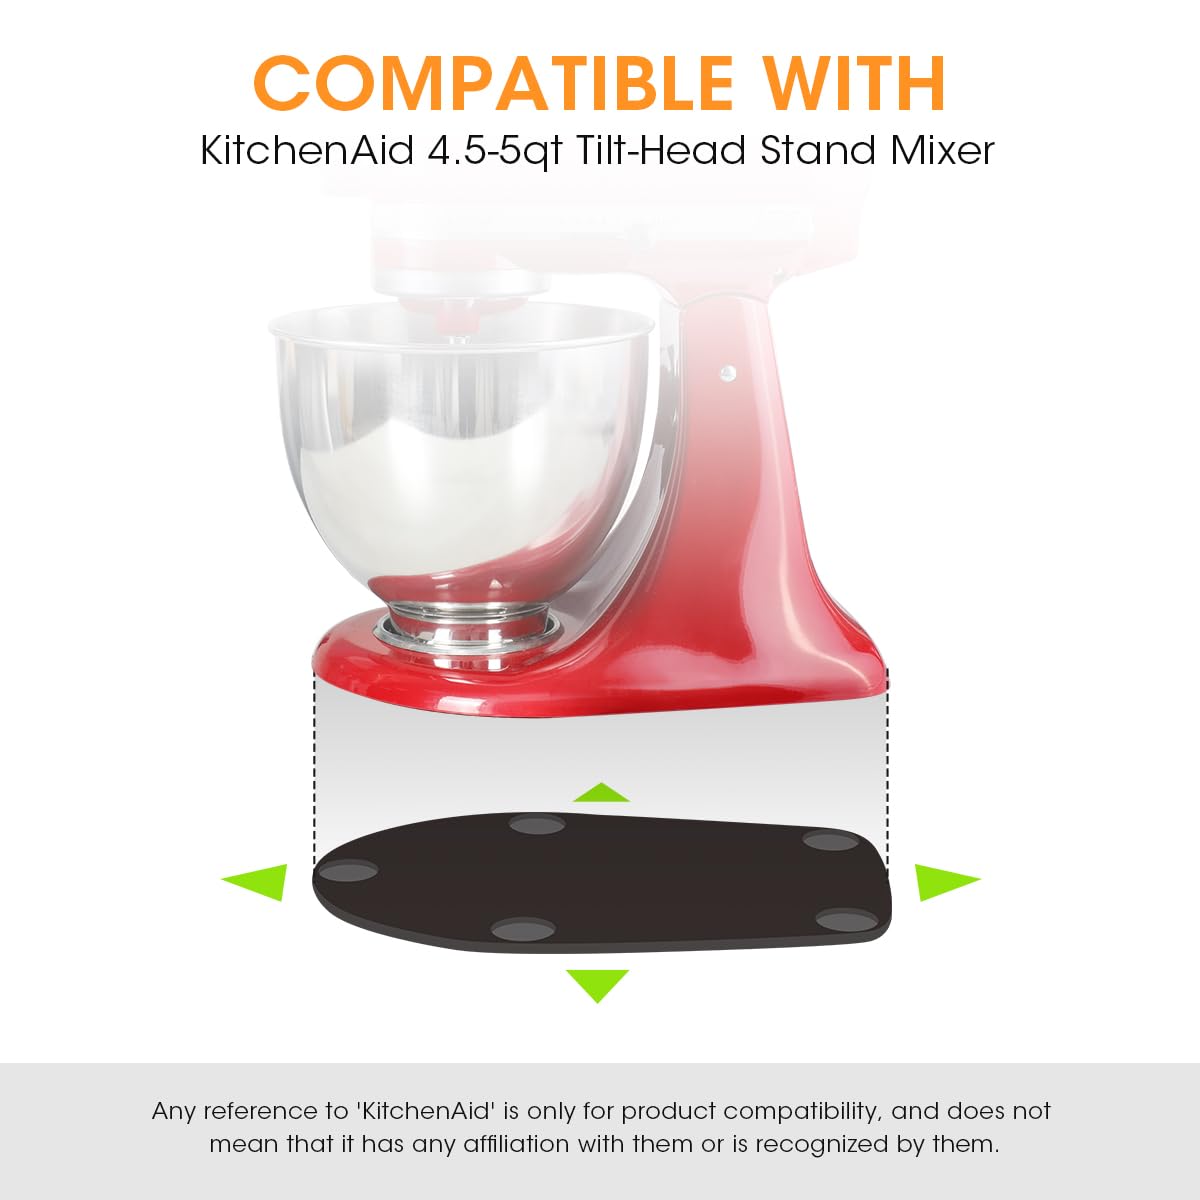 compatible with kitchenaid 4.5-5qt illt-head stand mixer